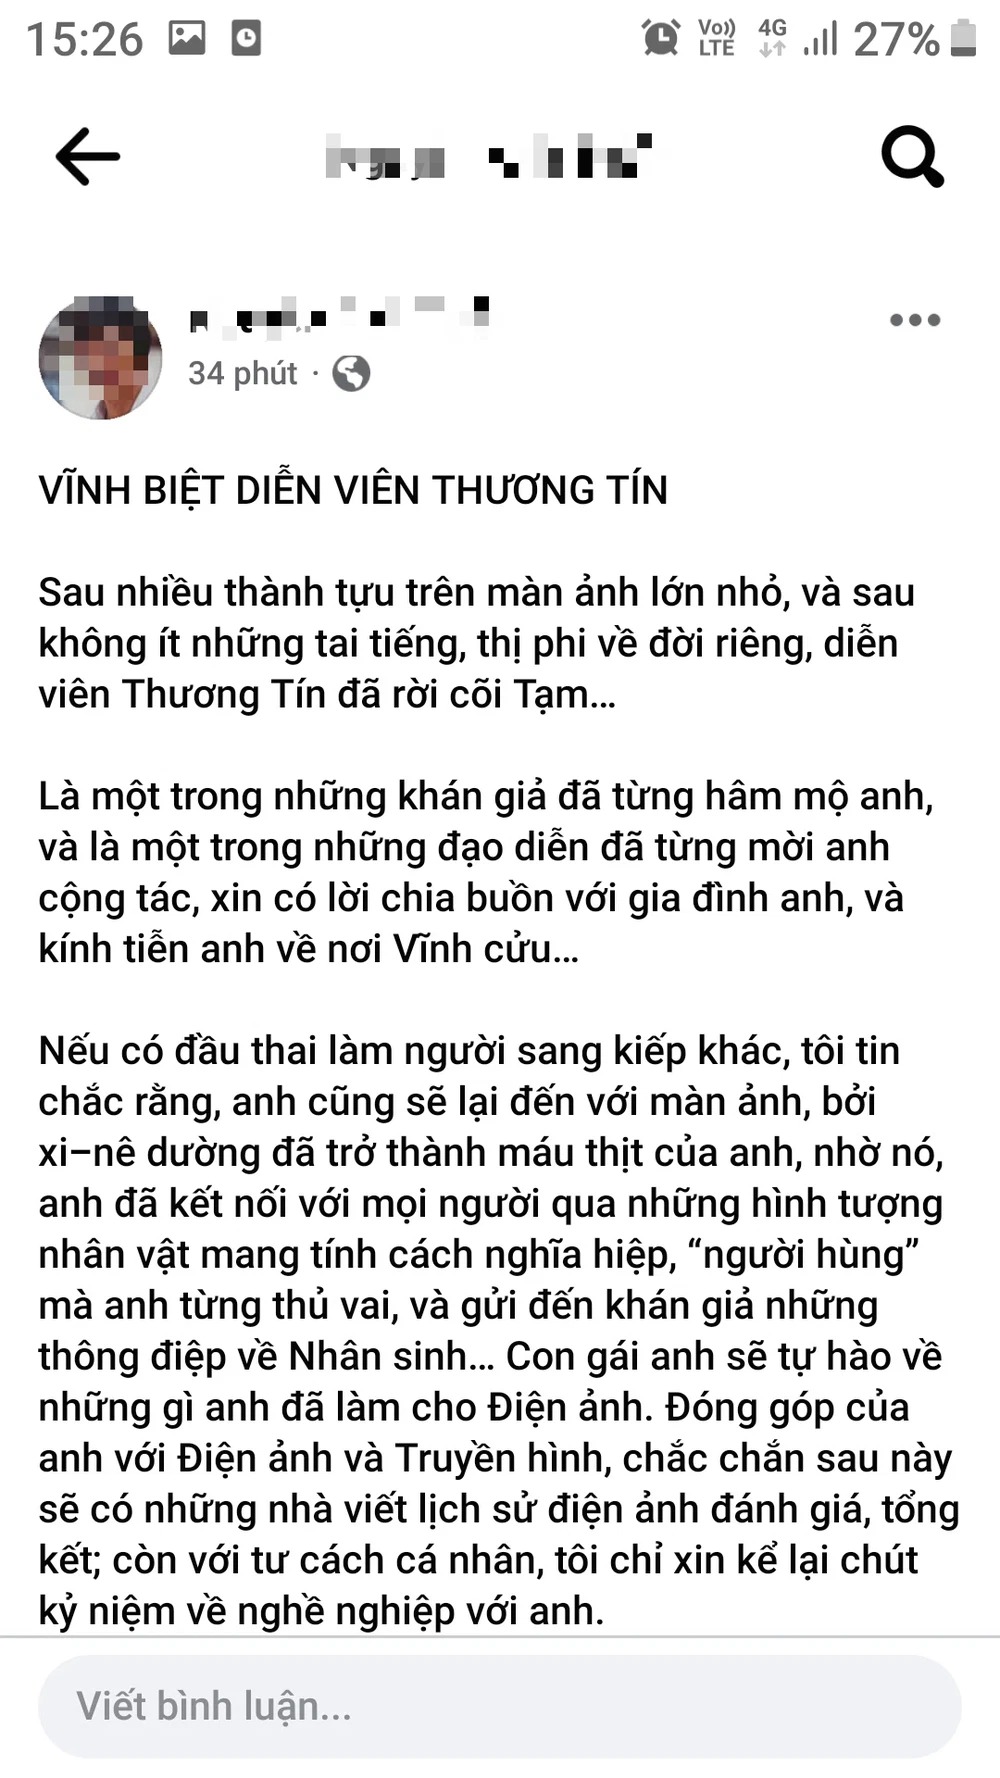 tin-don-dien-vien-thuong-tin-qua-doi